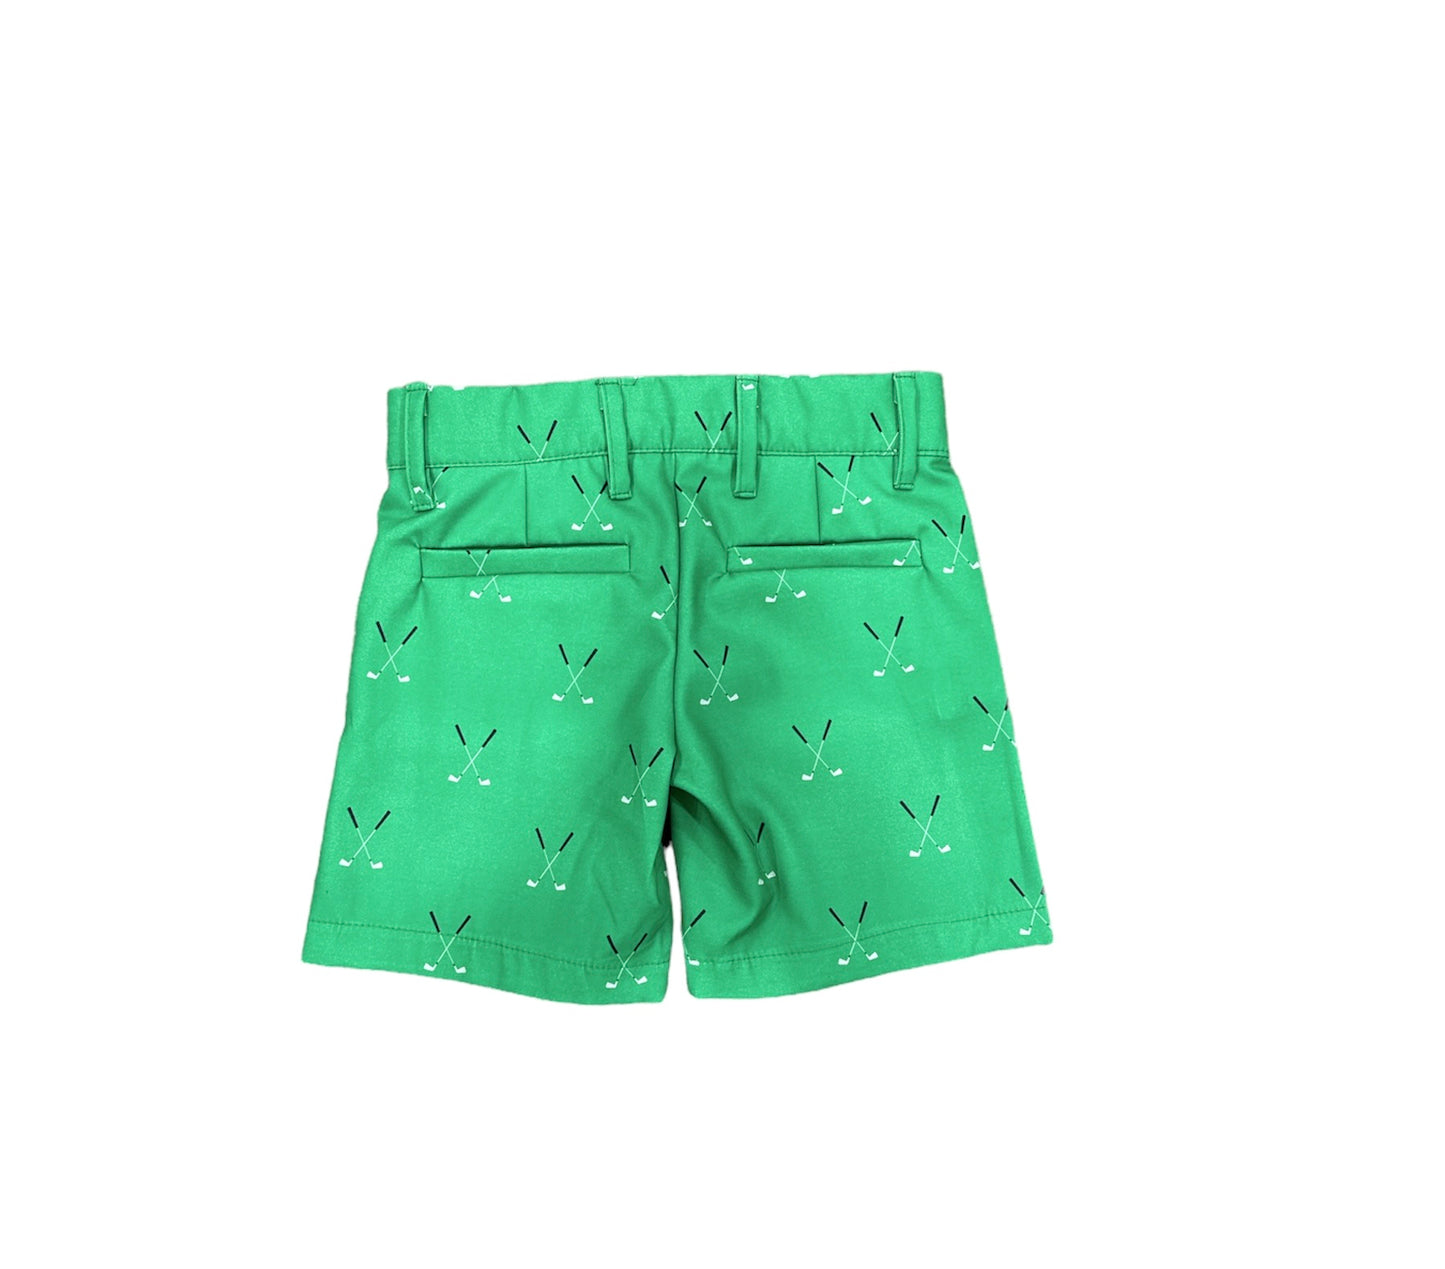 Golf Shorts - Emerald Golf